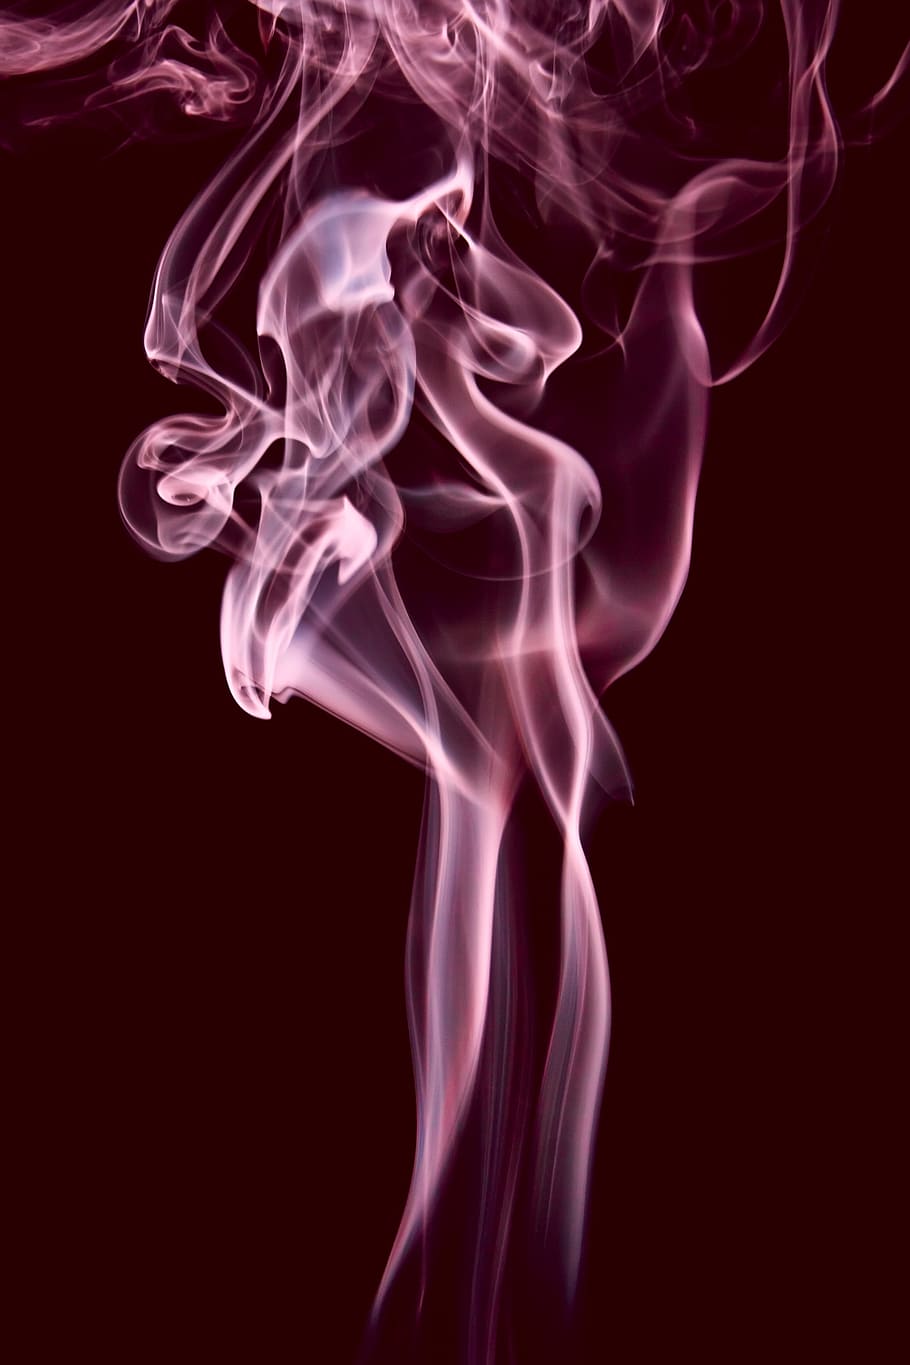 fumaça, cheiro, cor, aroma, resumo, plano de fundo, aromaterapia, tiro do estúdio, fumaça - estrutura física, movimento